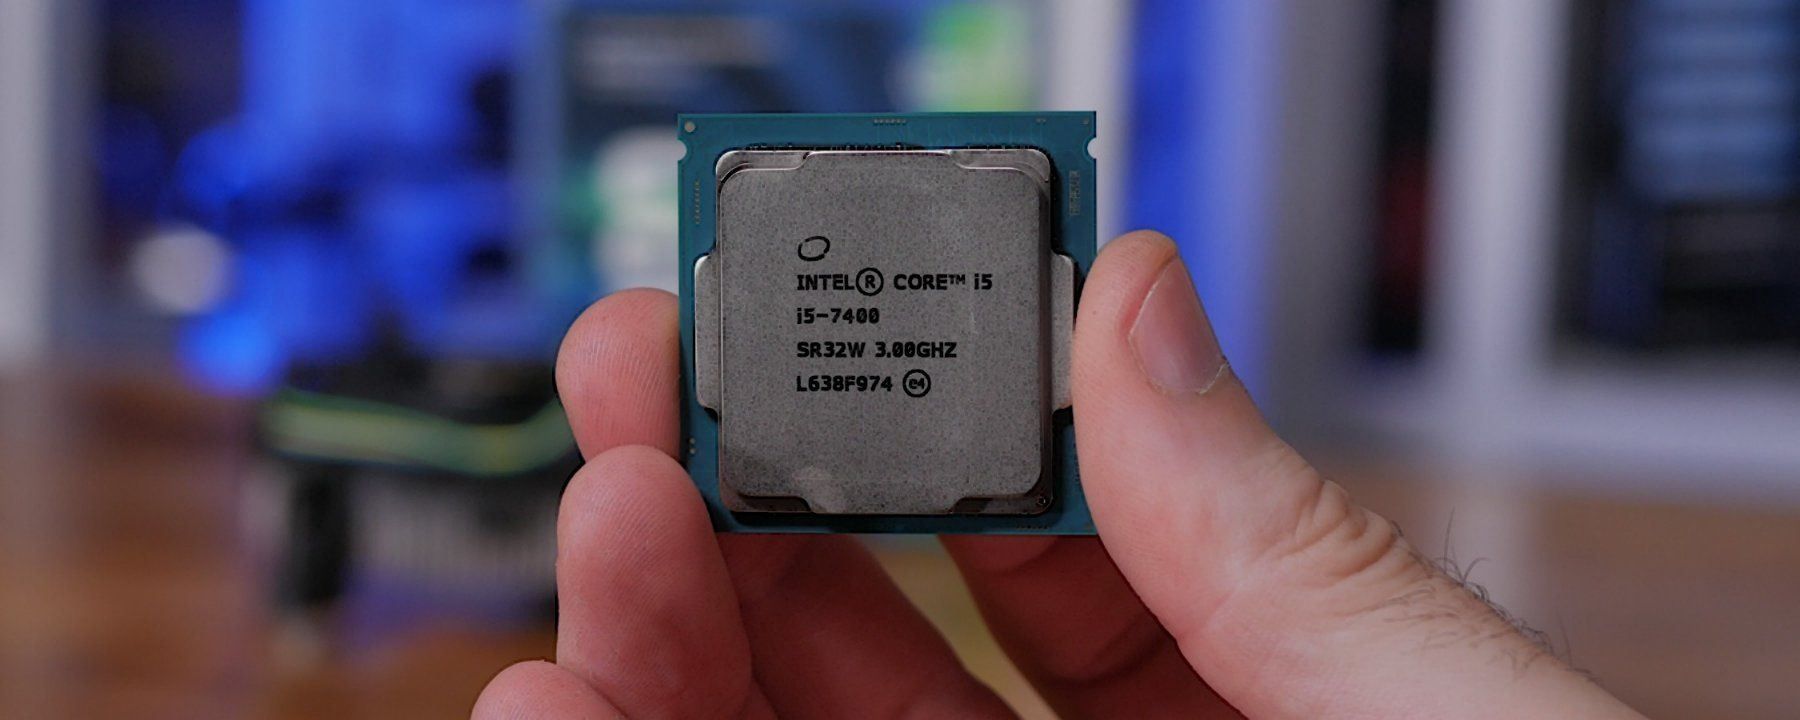 Intel Core i5 7400 @ 3.00GHz acheter sur Ricardo